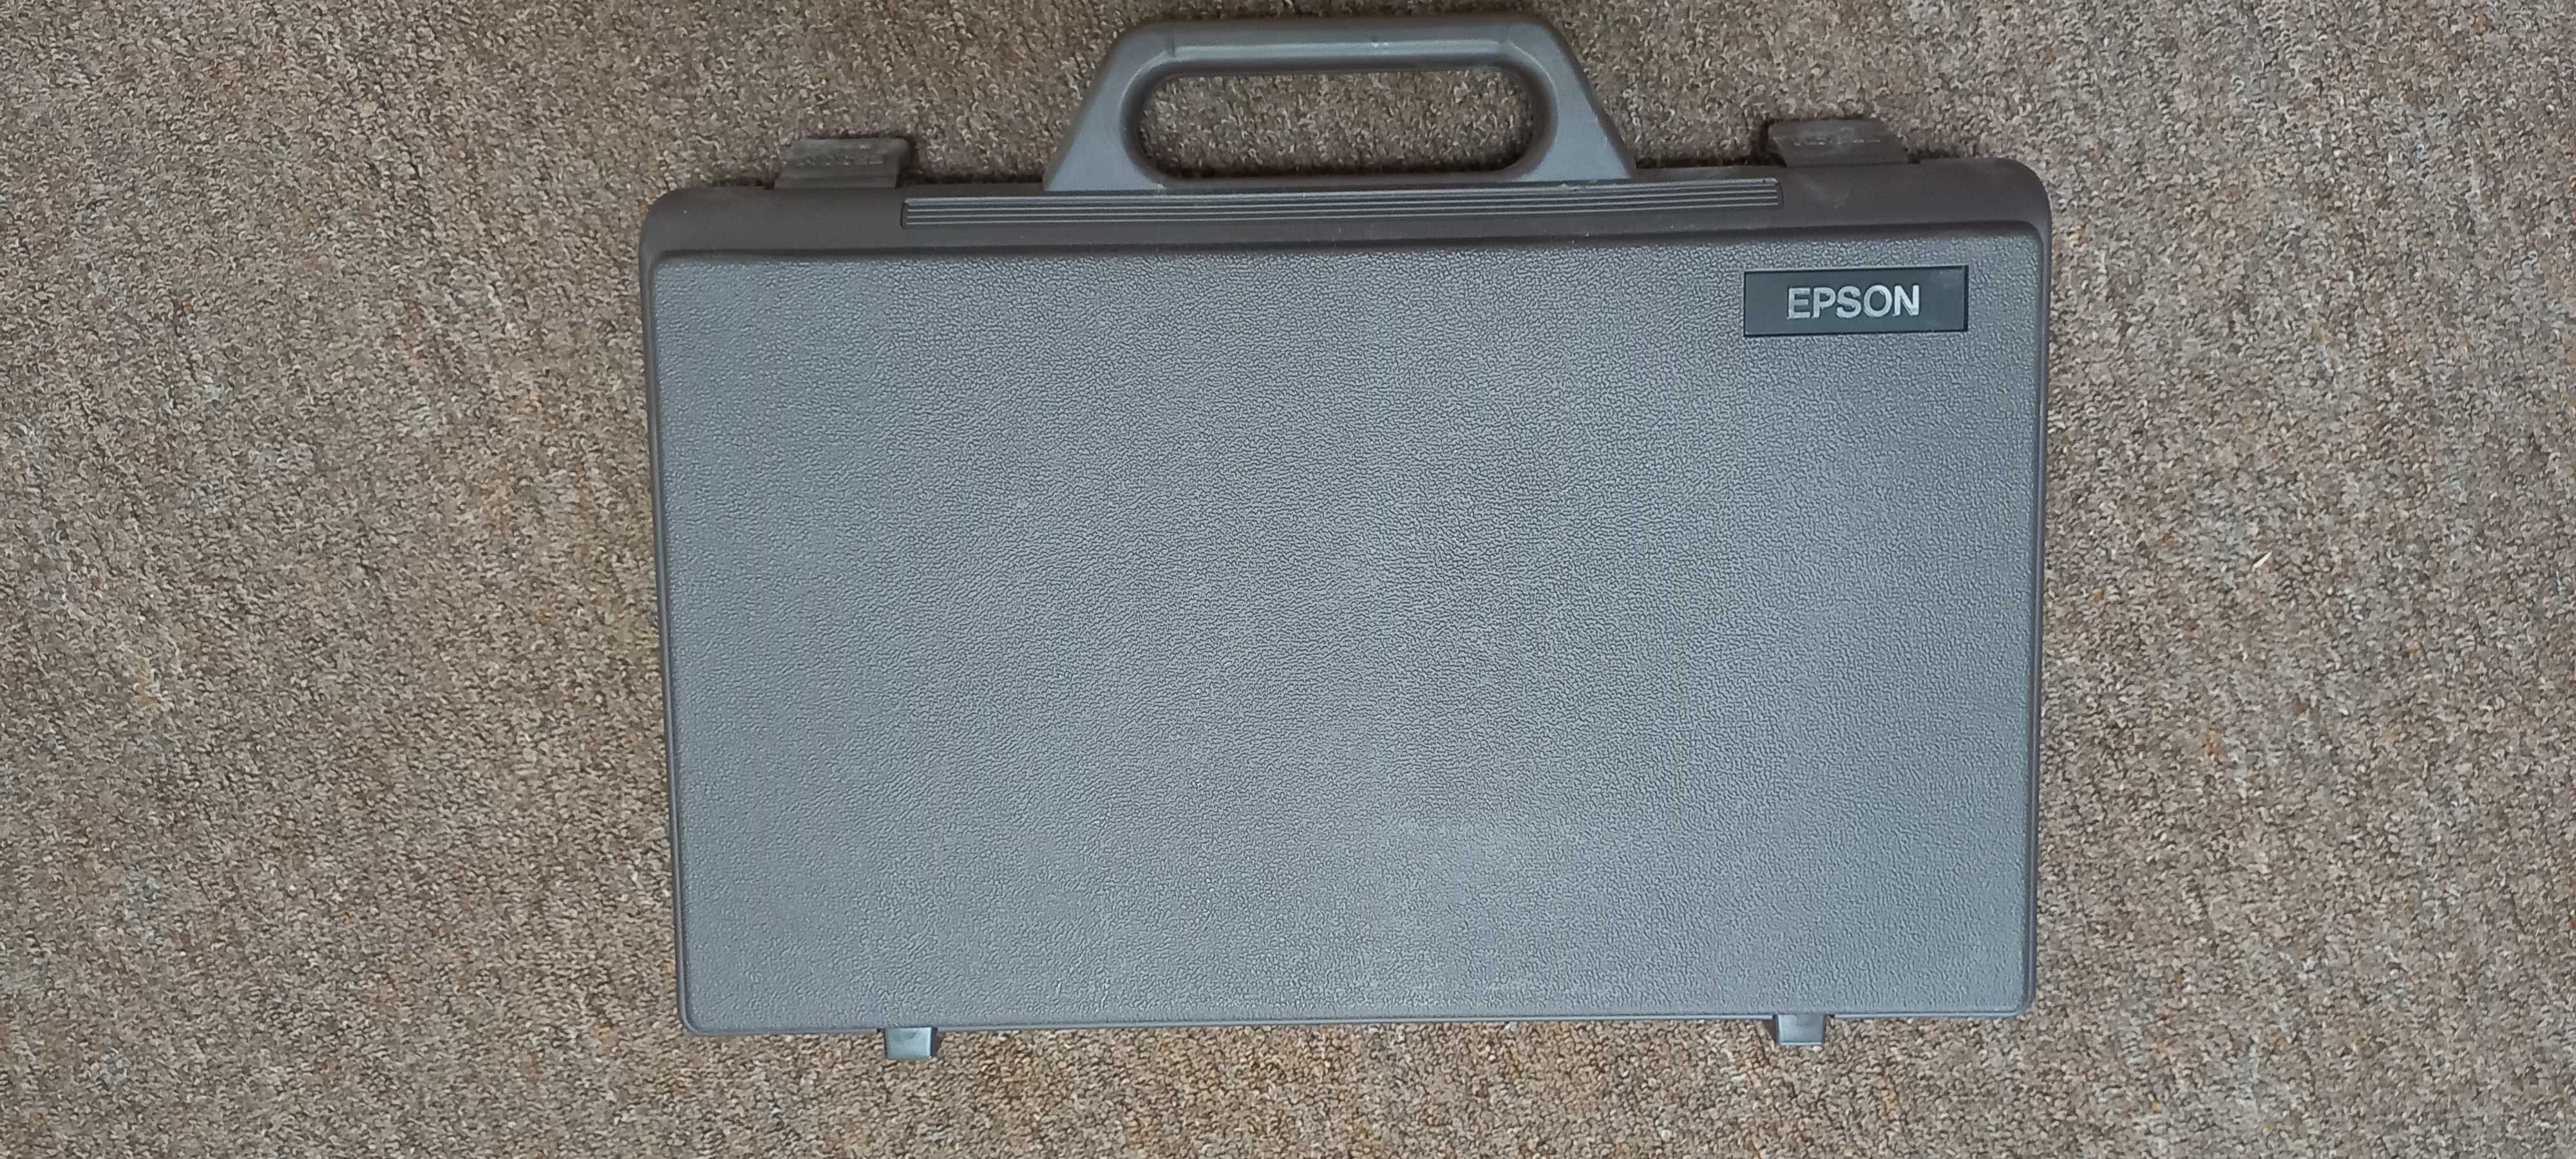 Винтажный ноутбук EPSON HX-20